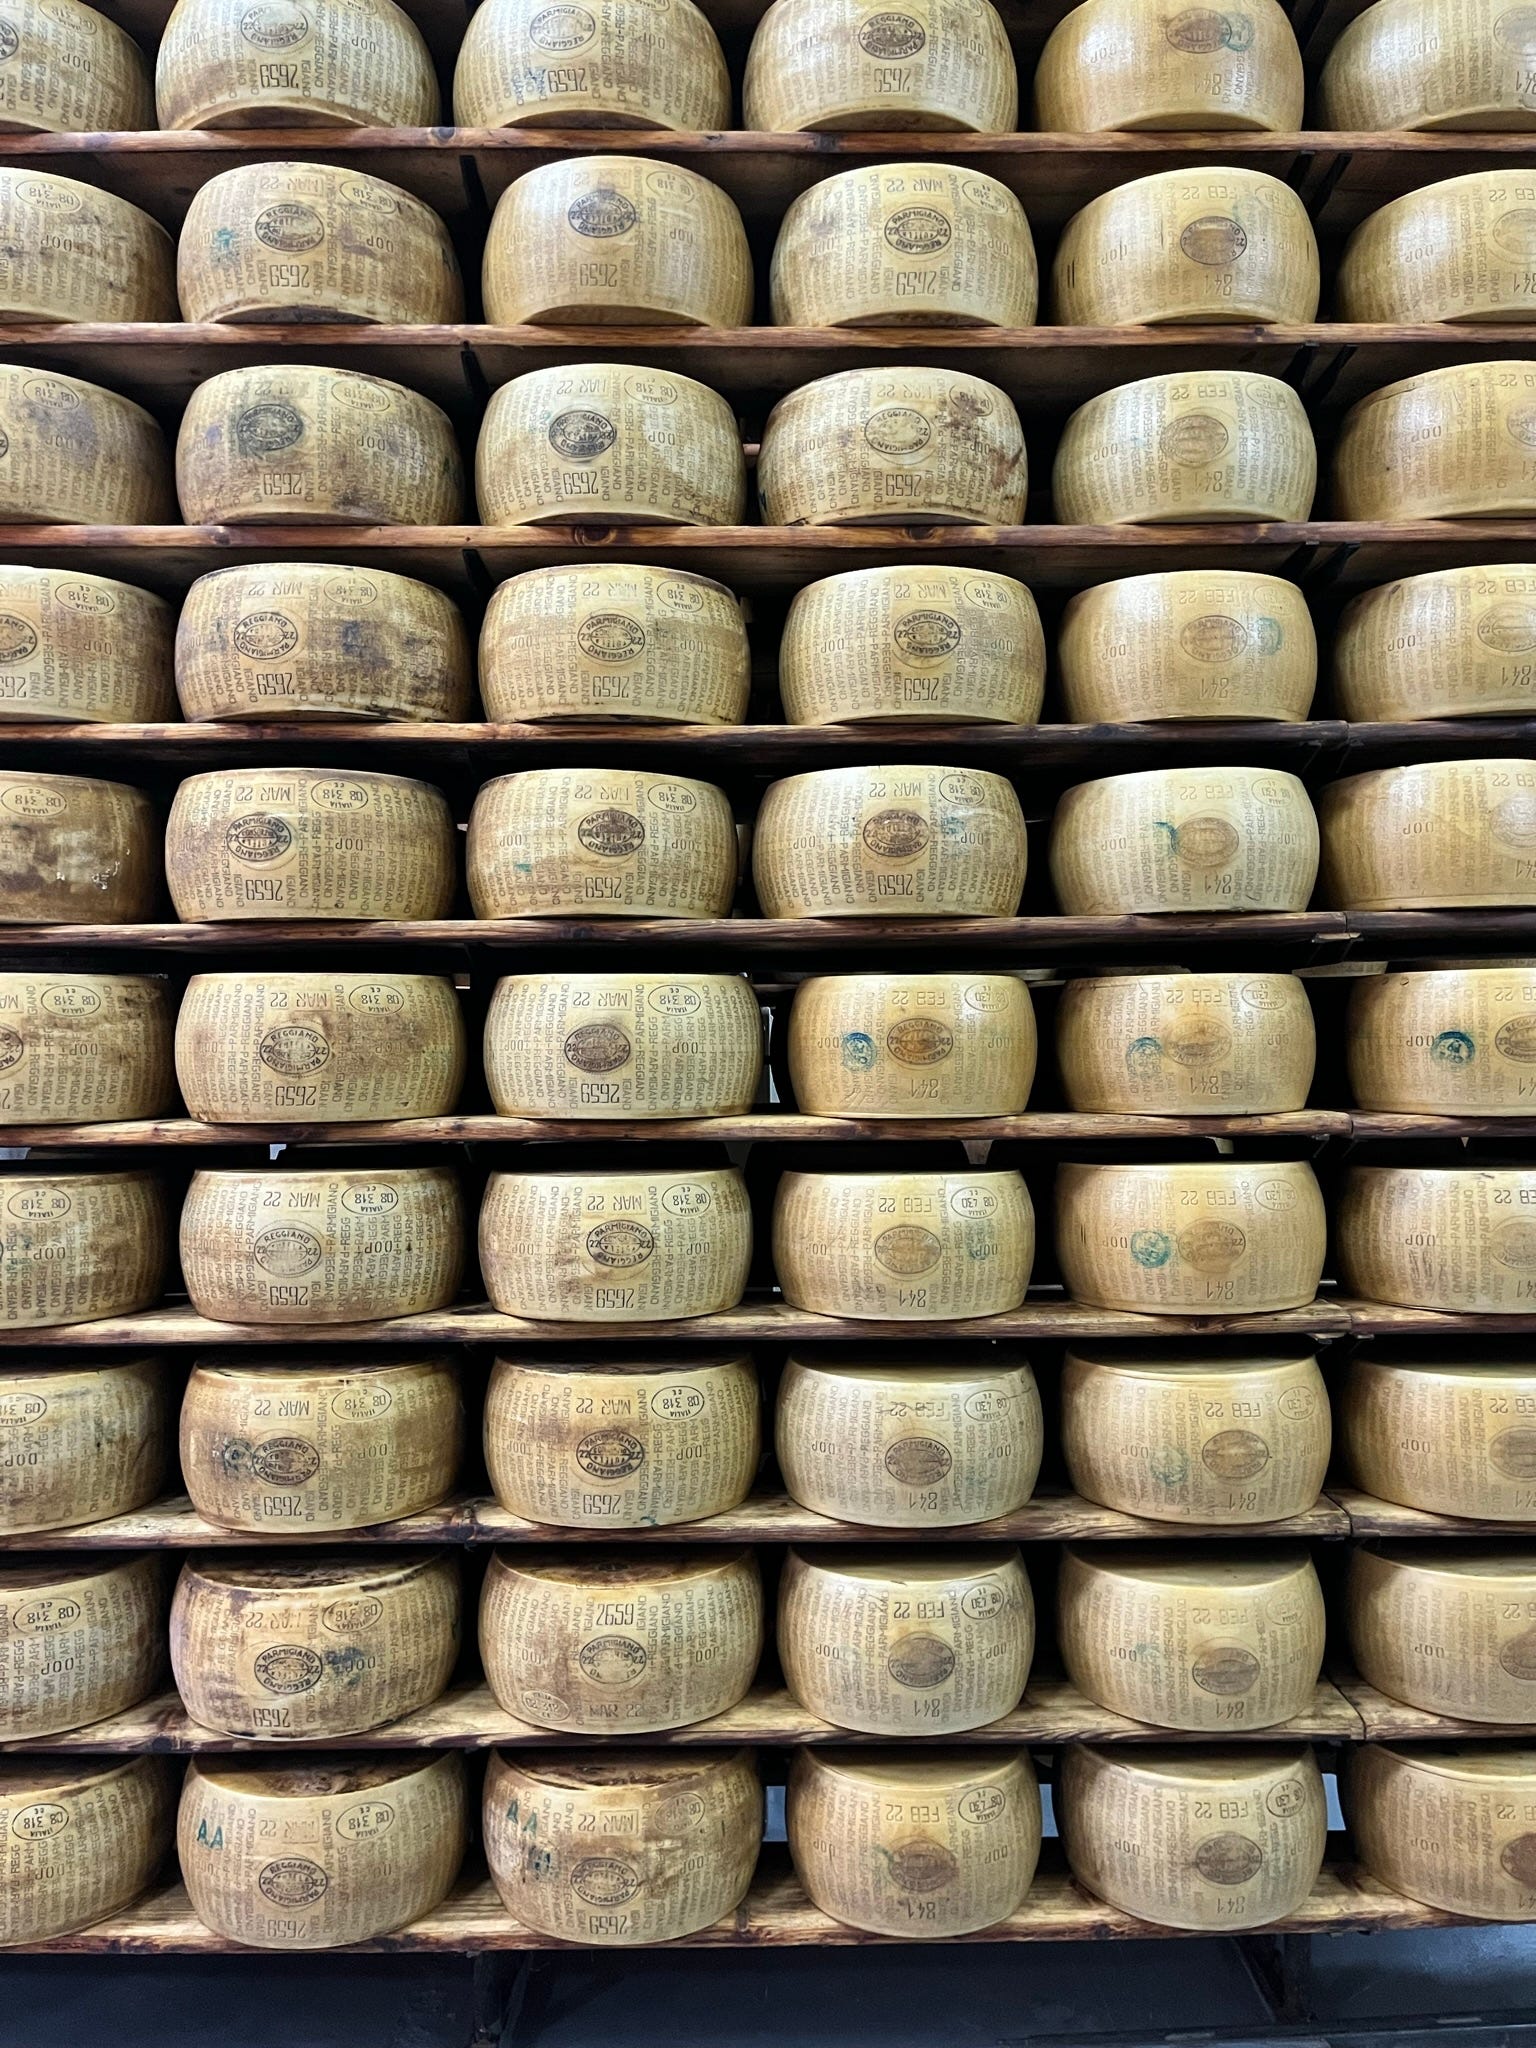 Not All Parm is Created Equal: Cravero Parmigiano Reggiano